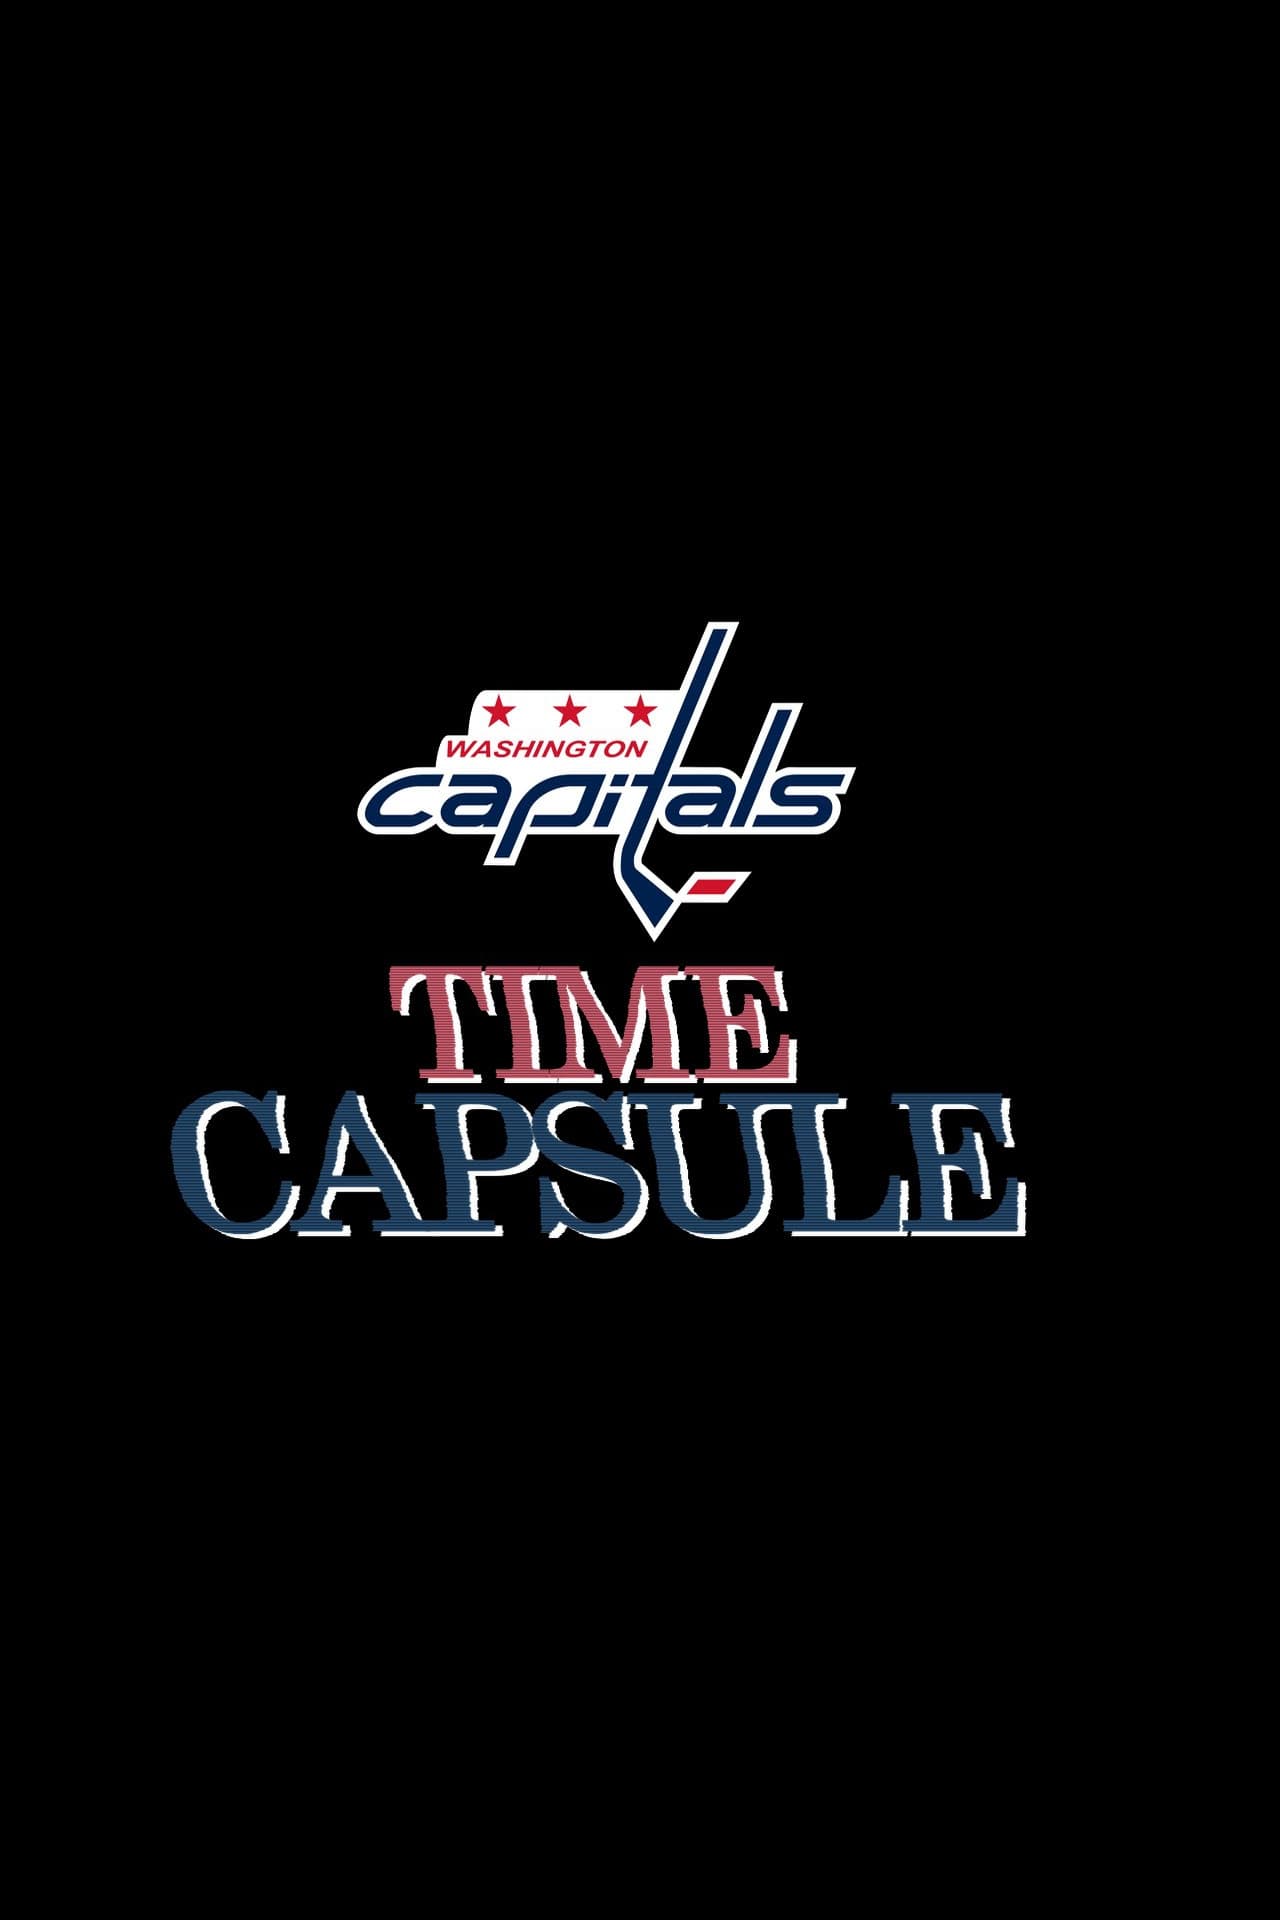 Washington Capitals Time Capsule